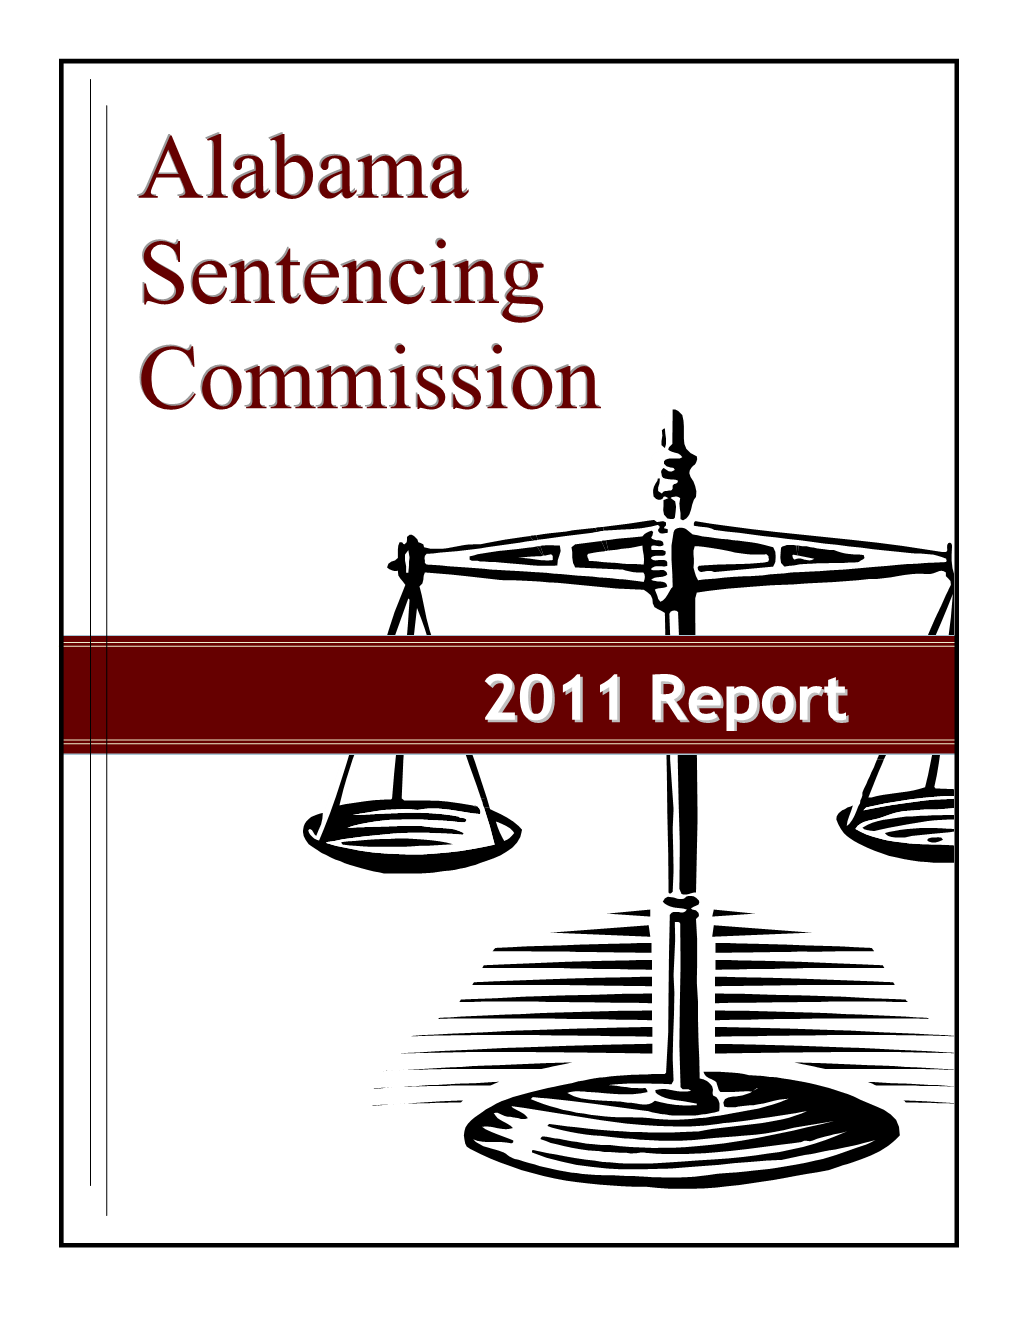 Alabama Sentencing Commission Annual Report (2011)